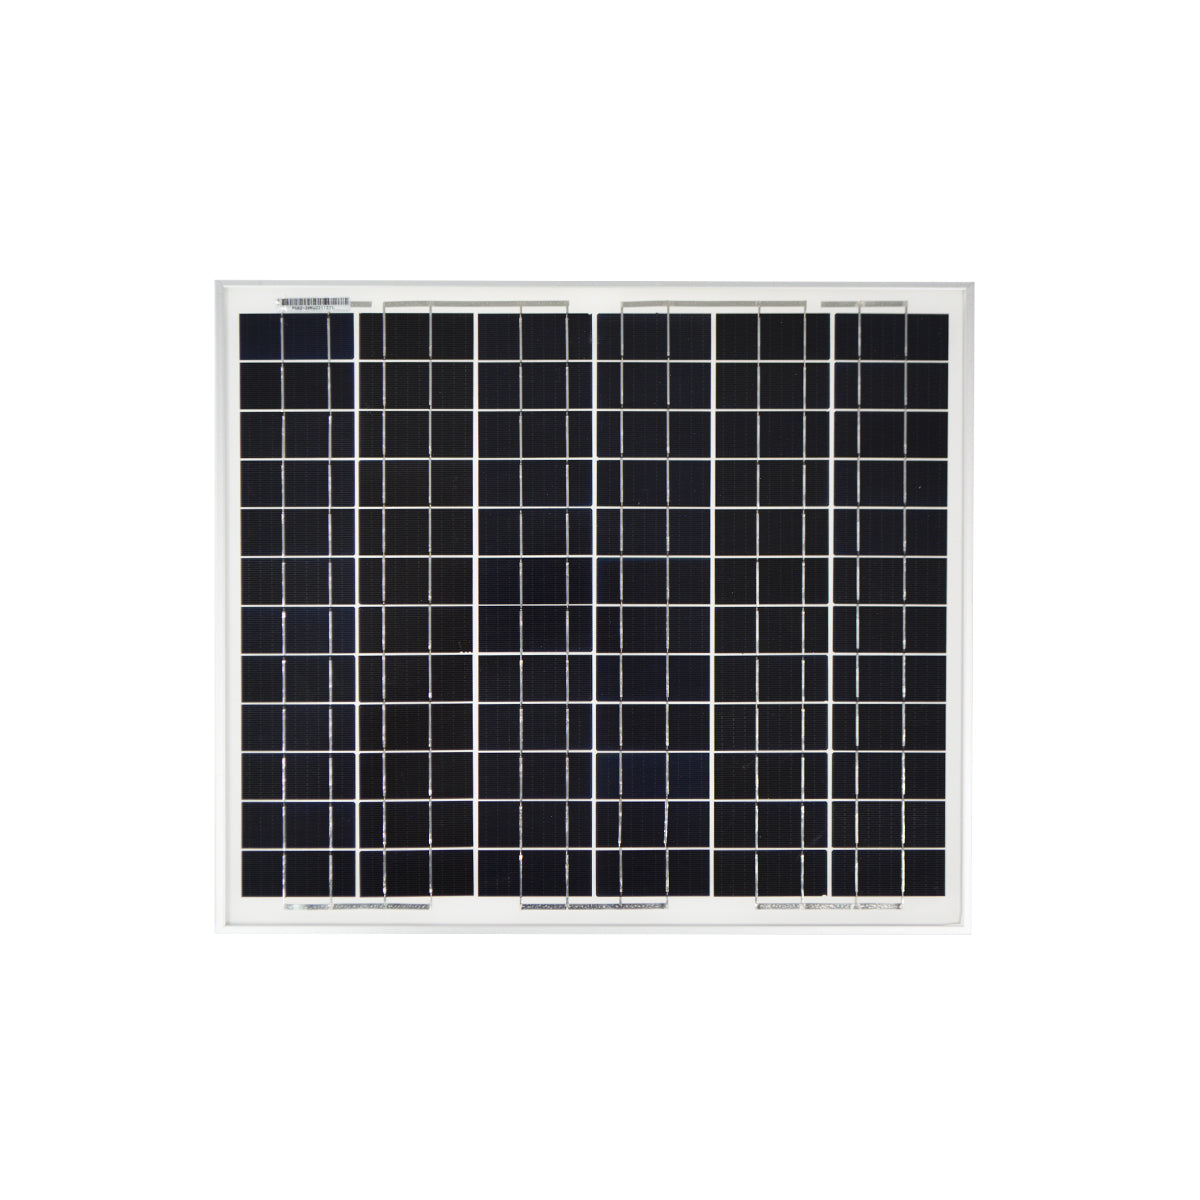 Sola-Prod Solar Panel 30W 36V Monocrystalline 72 Cell Front View